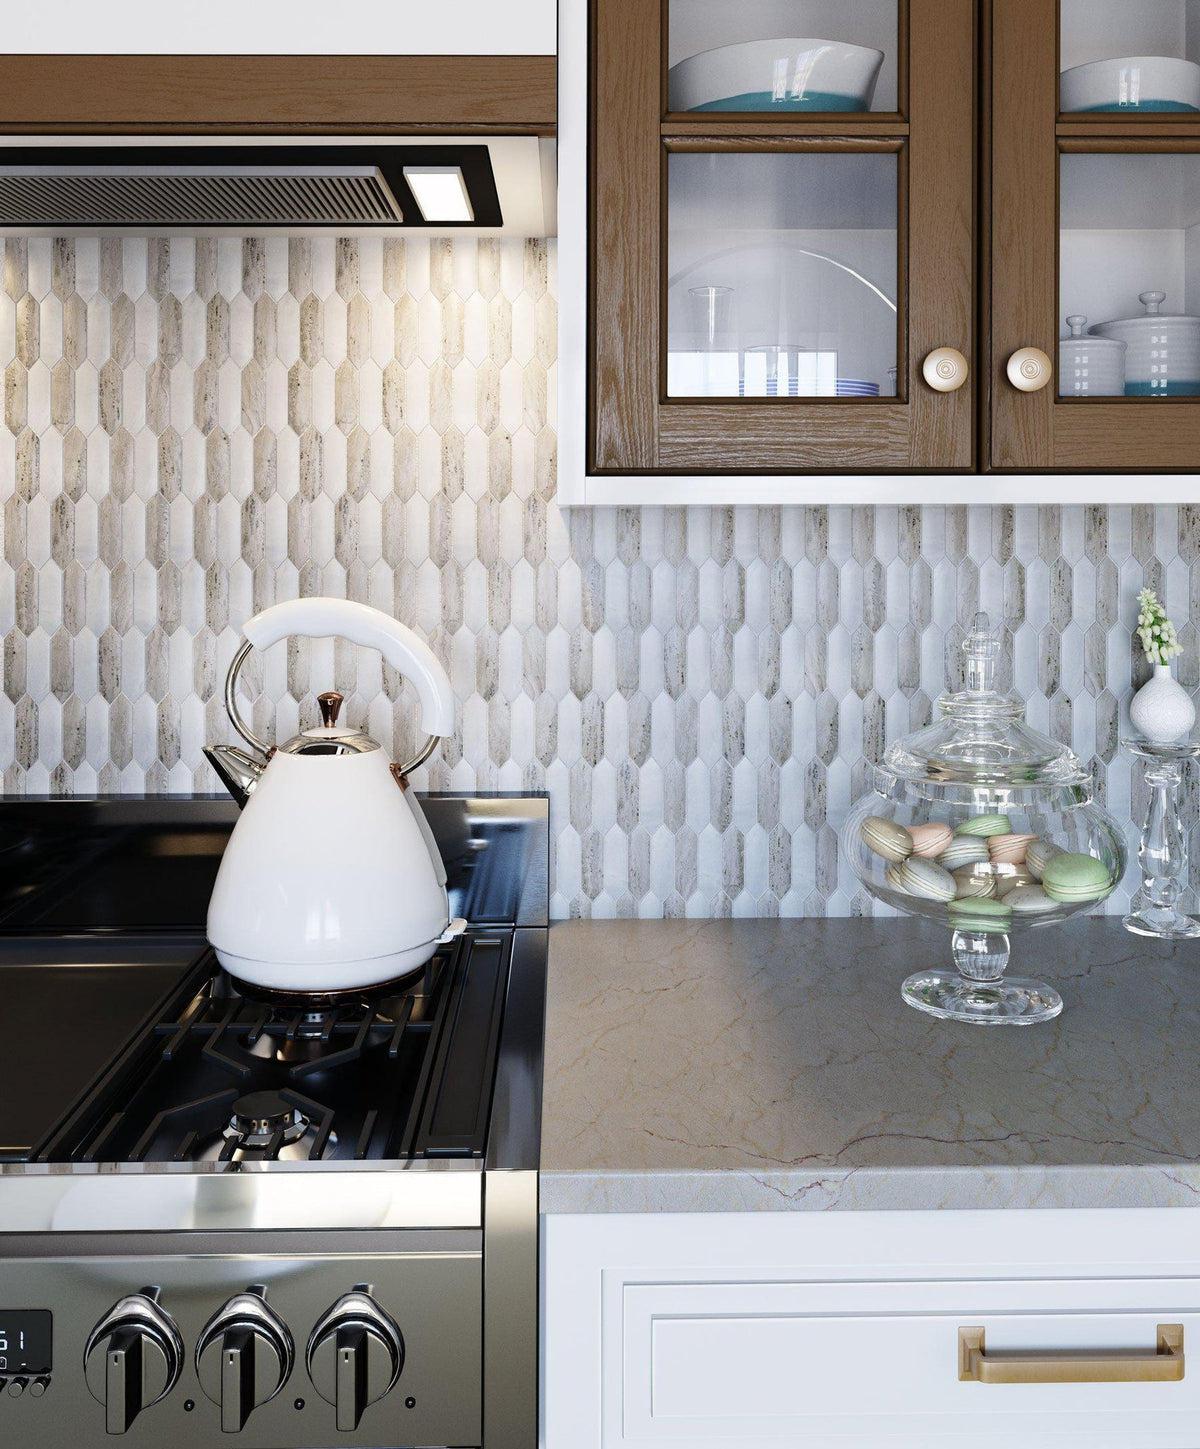 Sand Valley & Thassos Piquet Mosaic Tile for Kitchen Backsplash